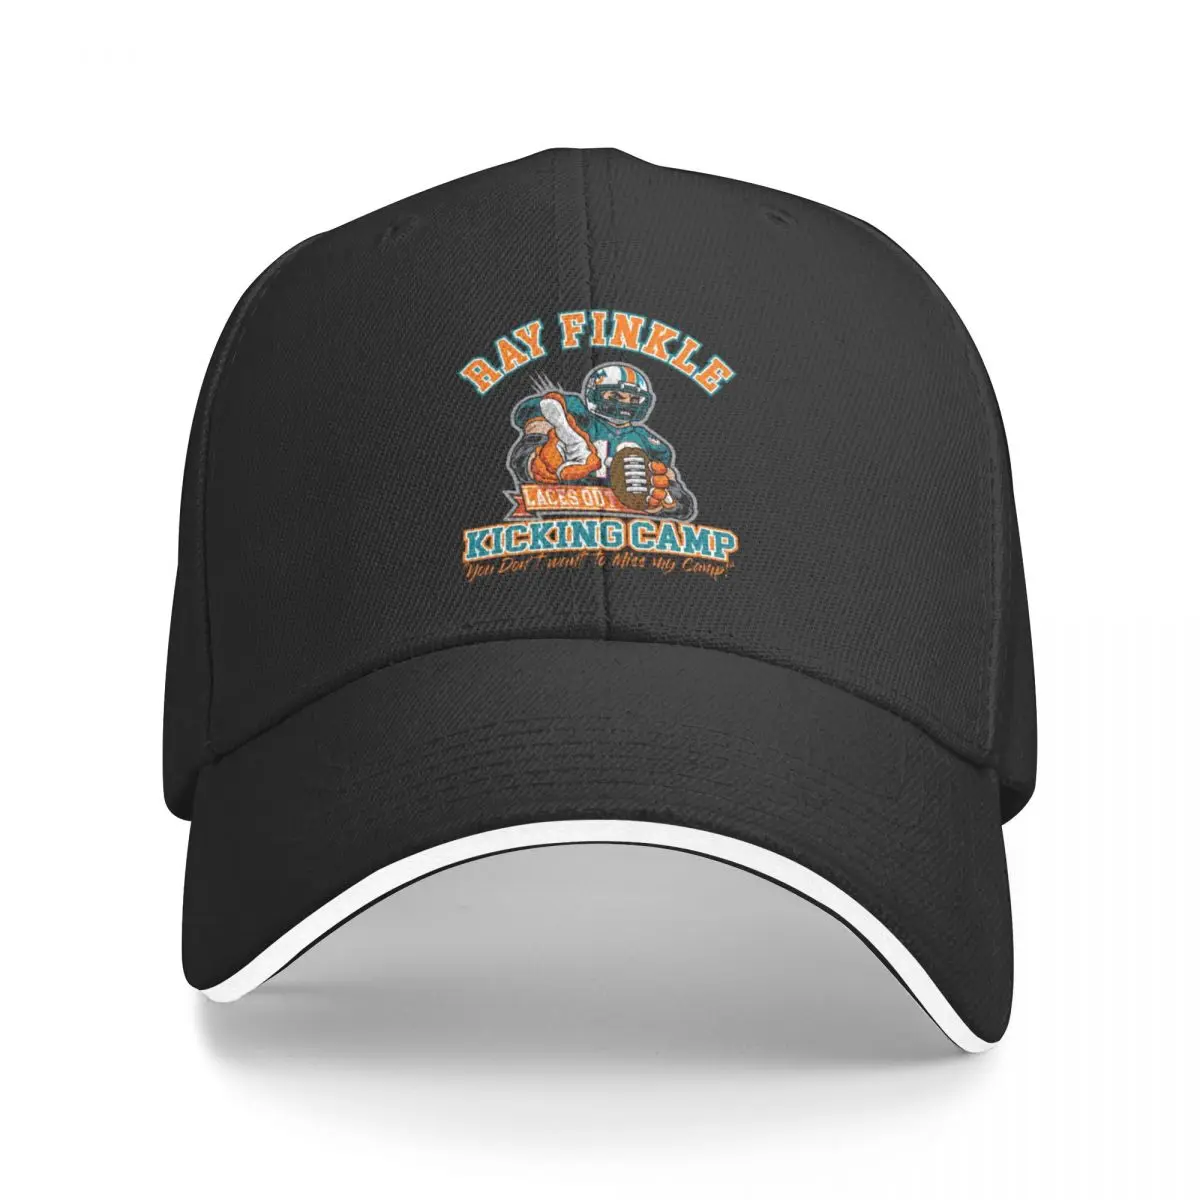 

Ray Finkle Kicking Camp Baseball Cap Sunhat summer hat Caps Women Men's